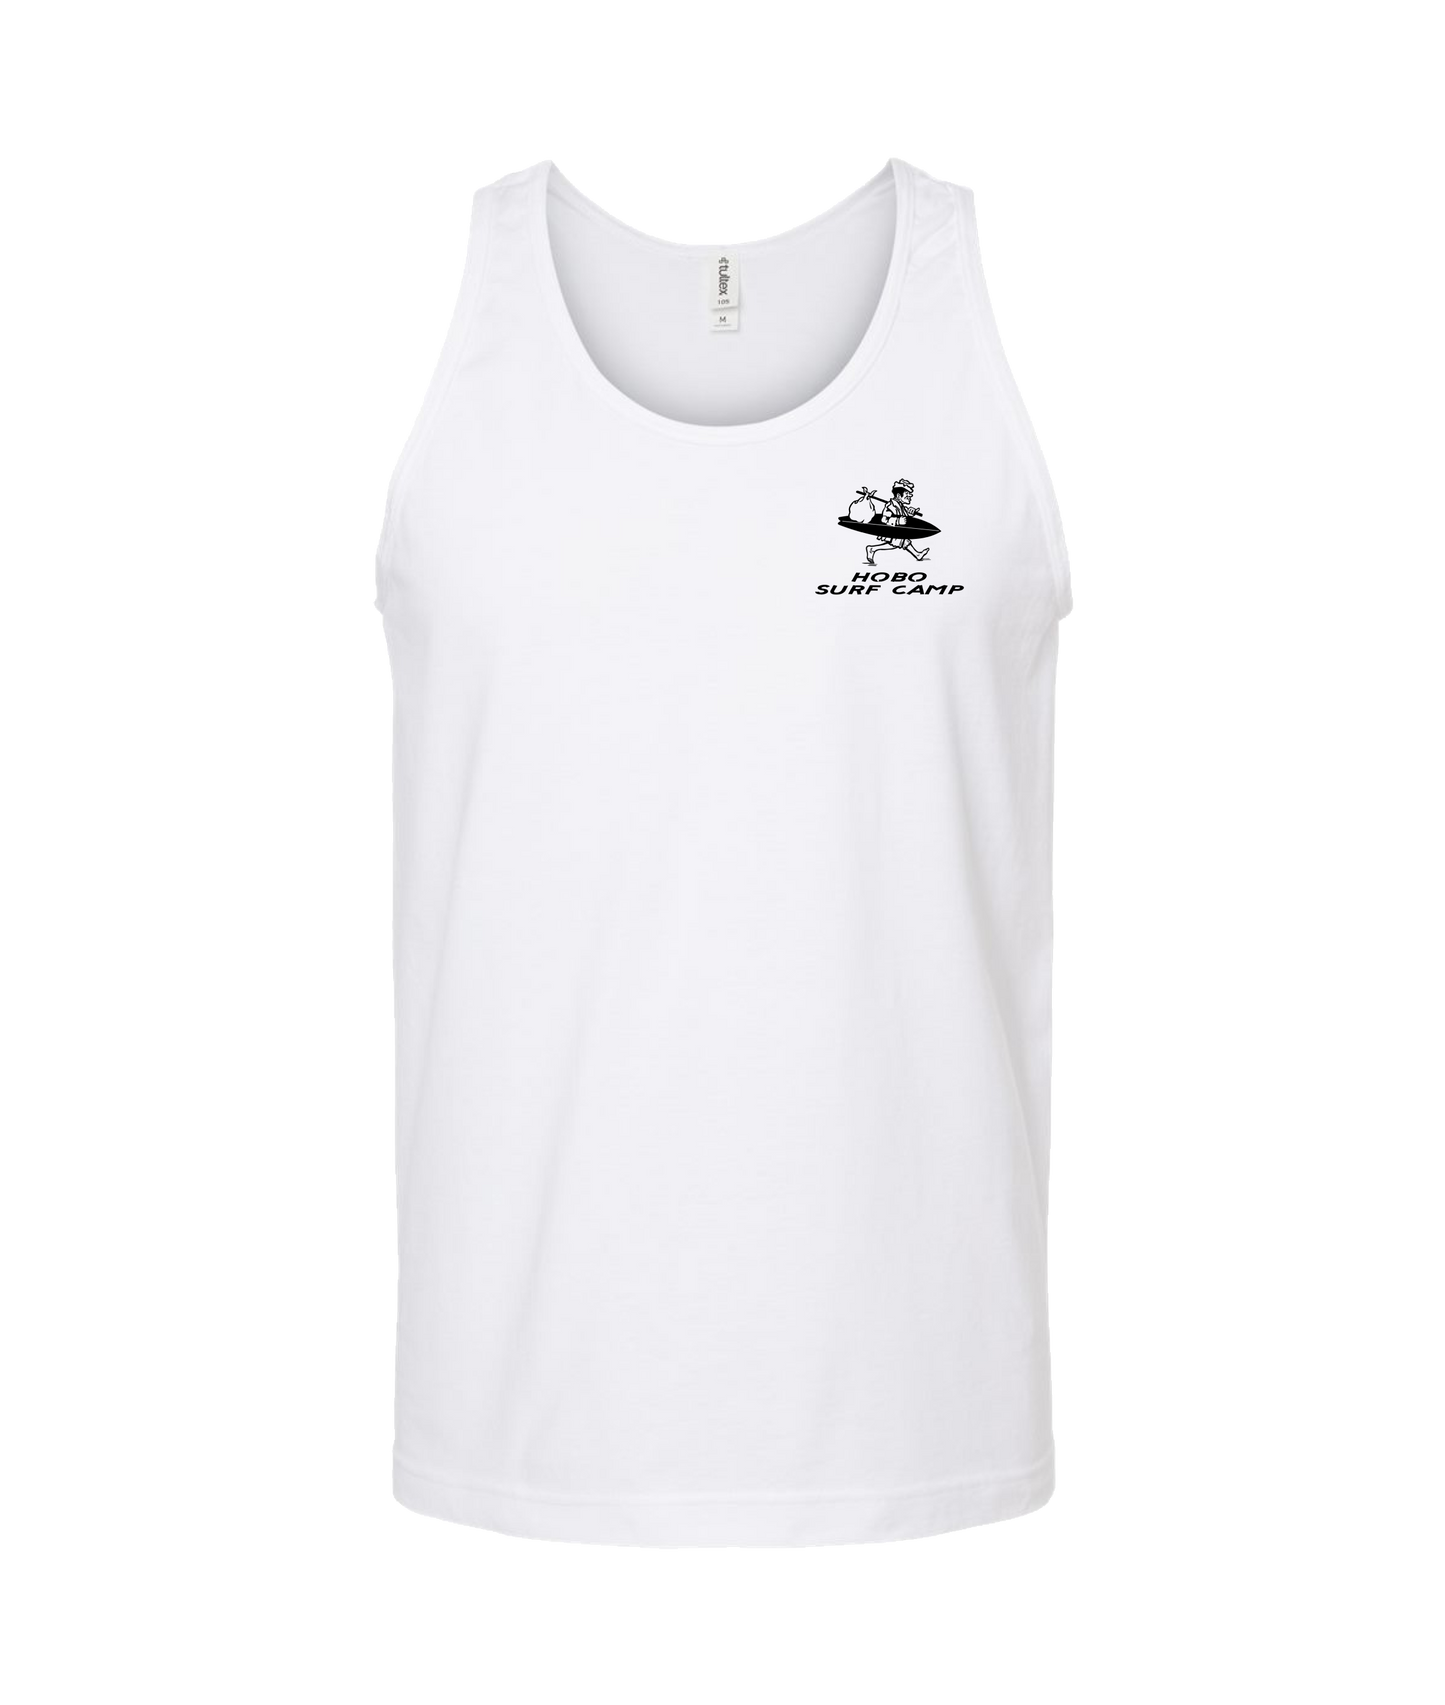 Dugz Shirtz - Hobo Surf Camp - White Tank Top